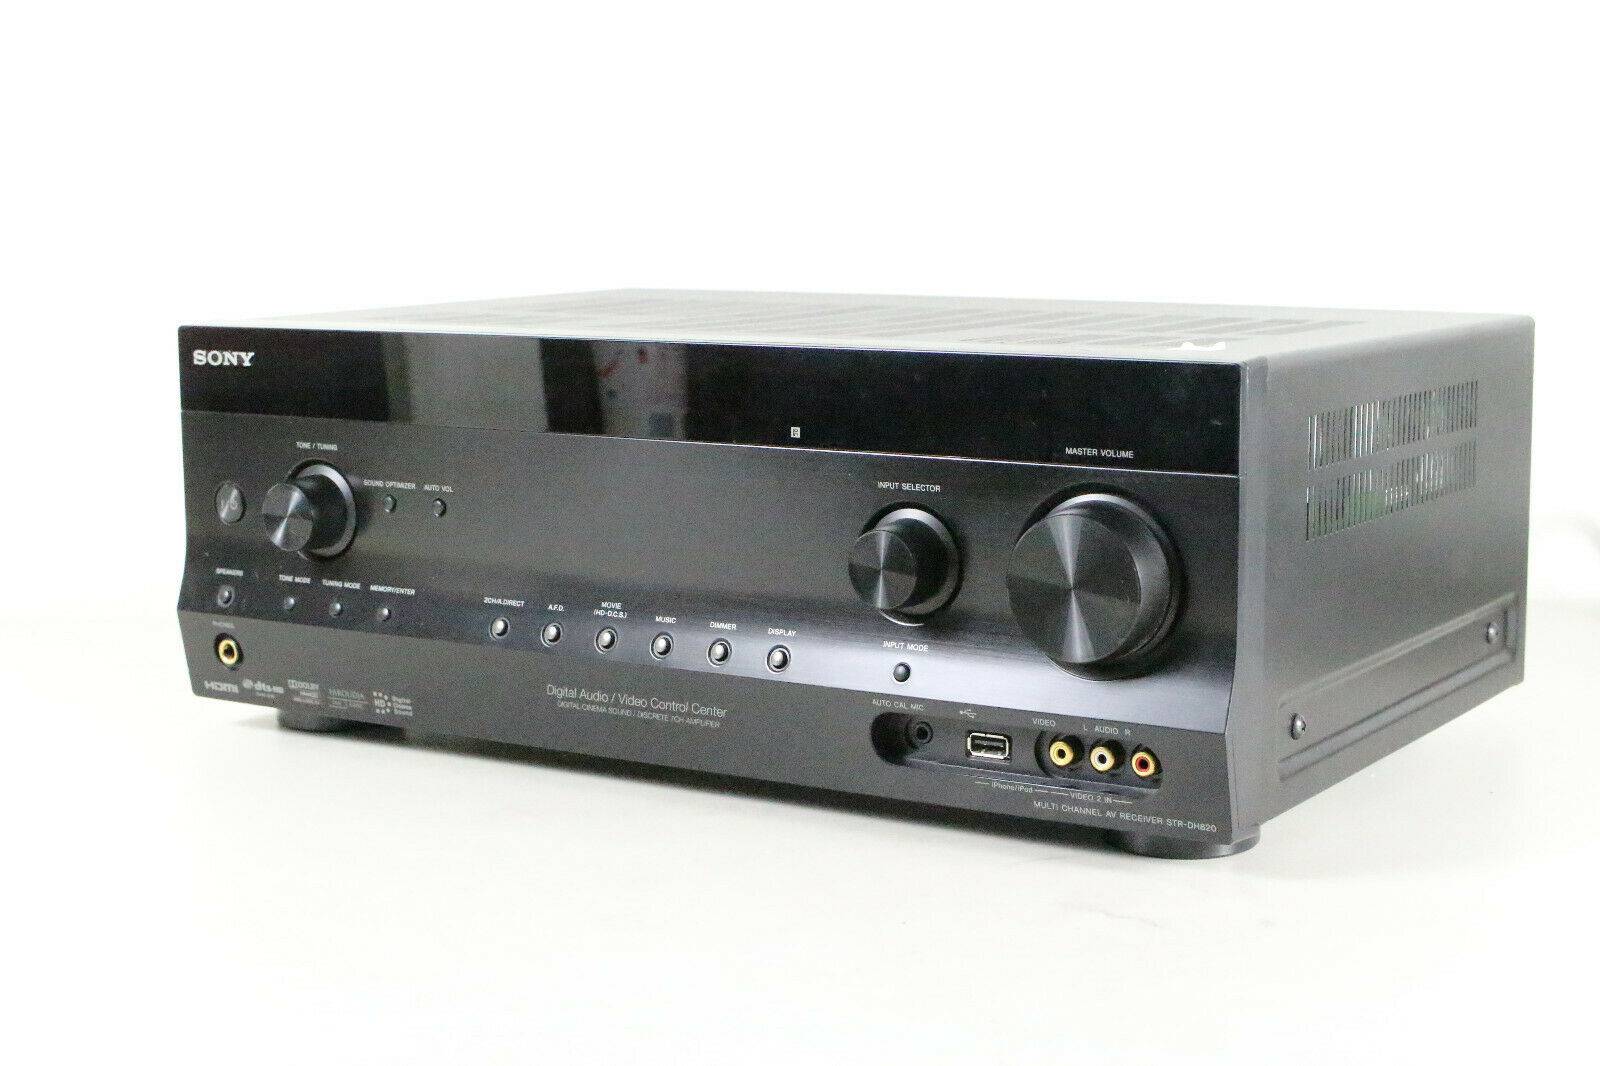 Sony STR-DH820